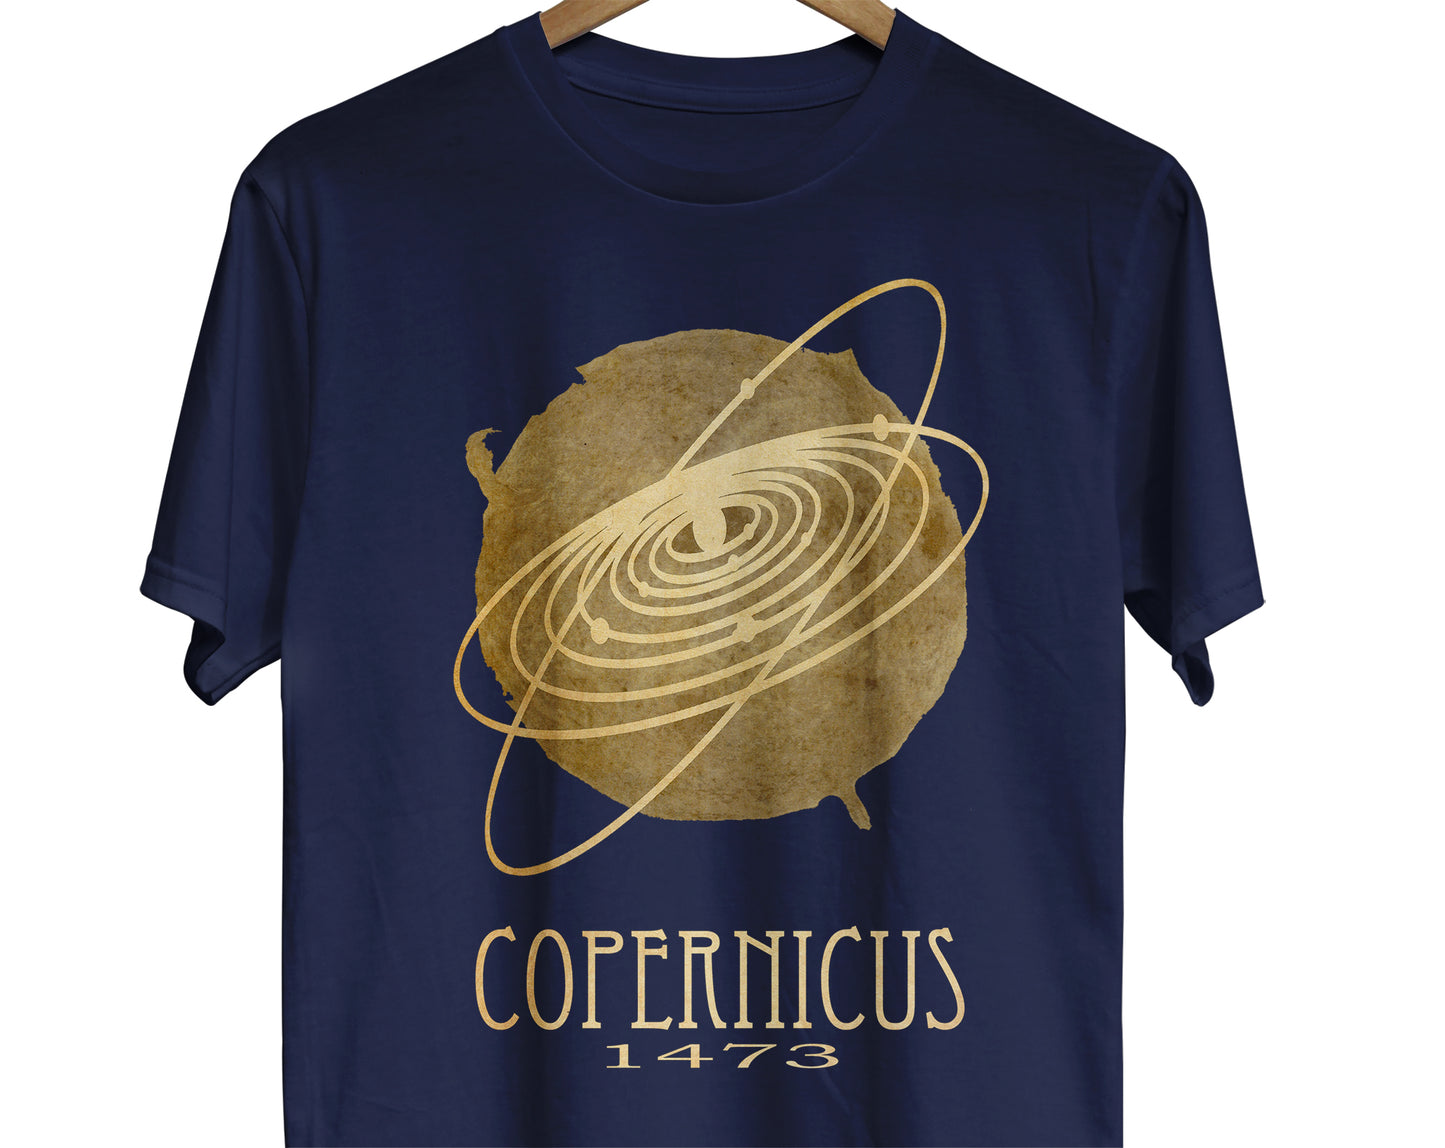 Nicolaus Copernicus solar system t-shirt for astronomy teacher